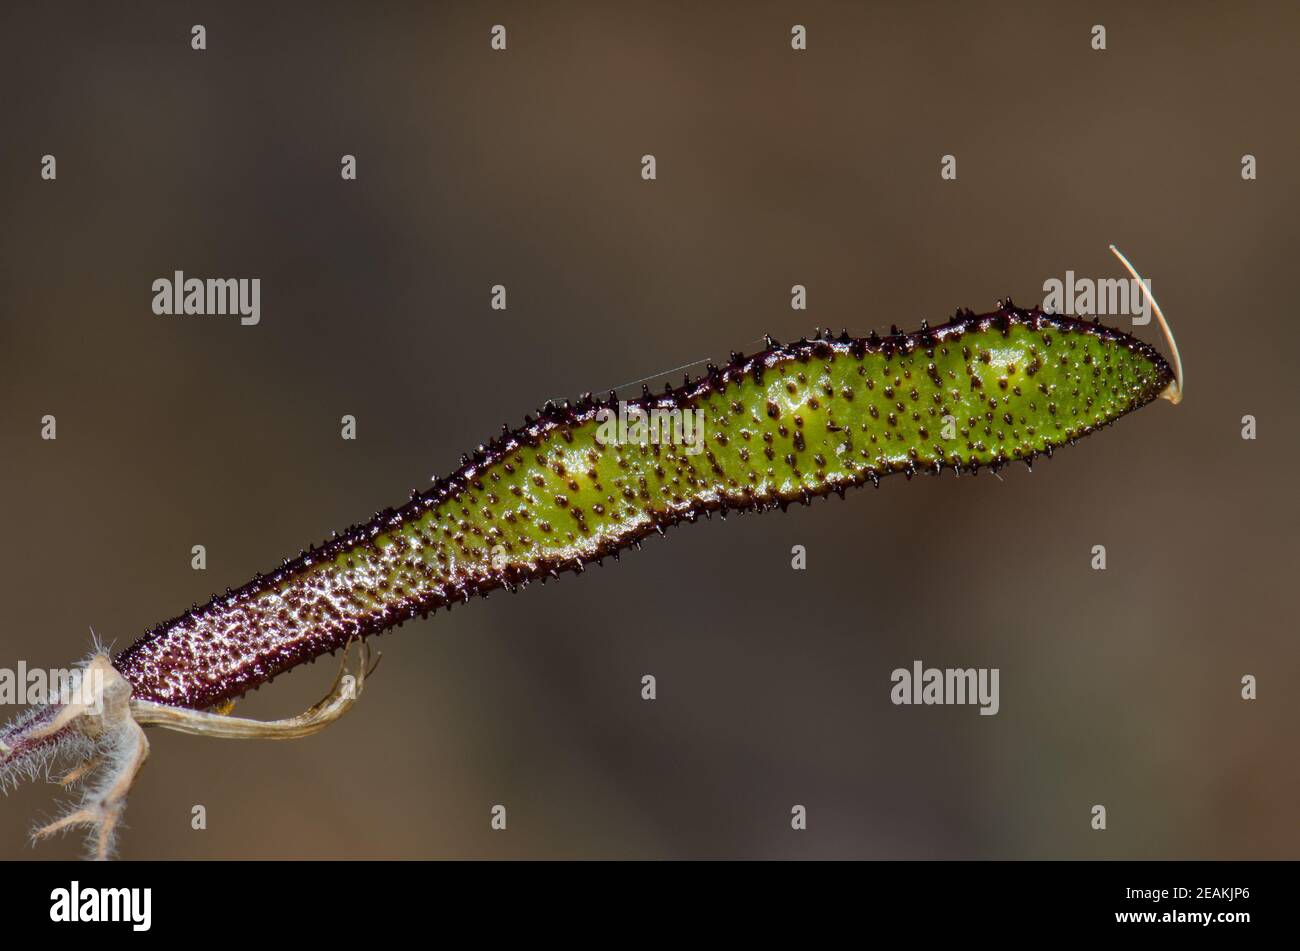 Legume of Canary Island flatpod Adenocarpus foliolosus. Stock Photo